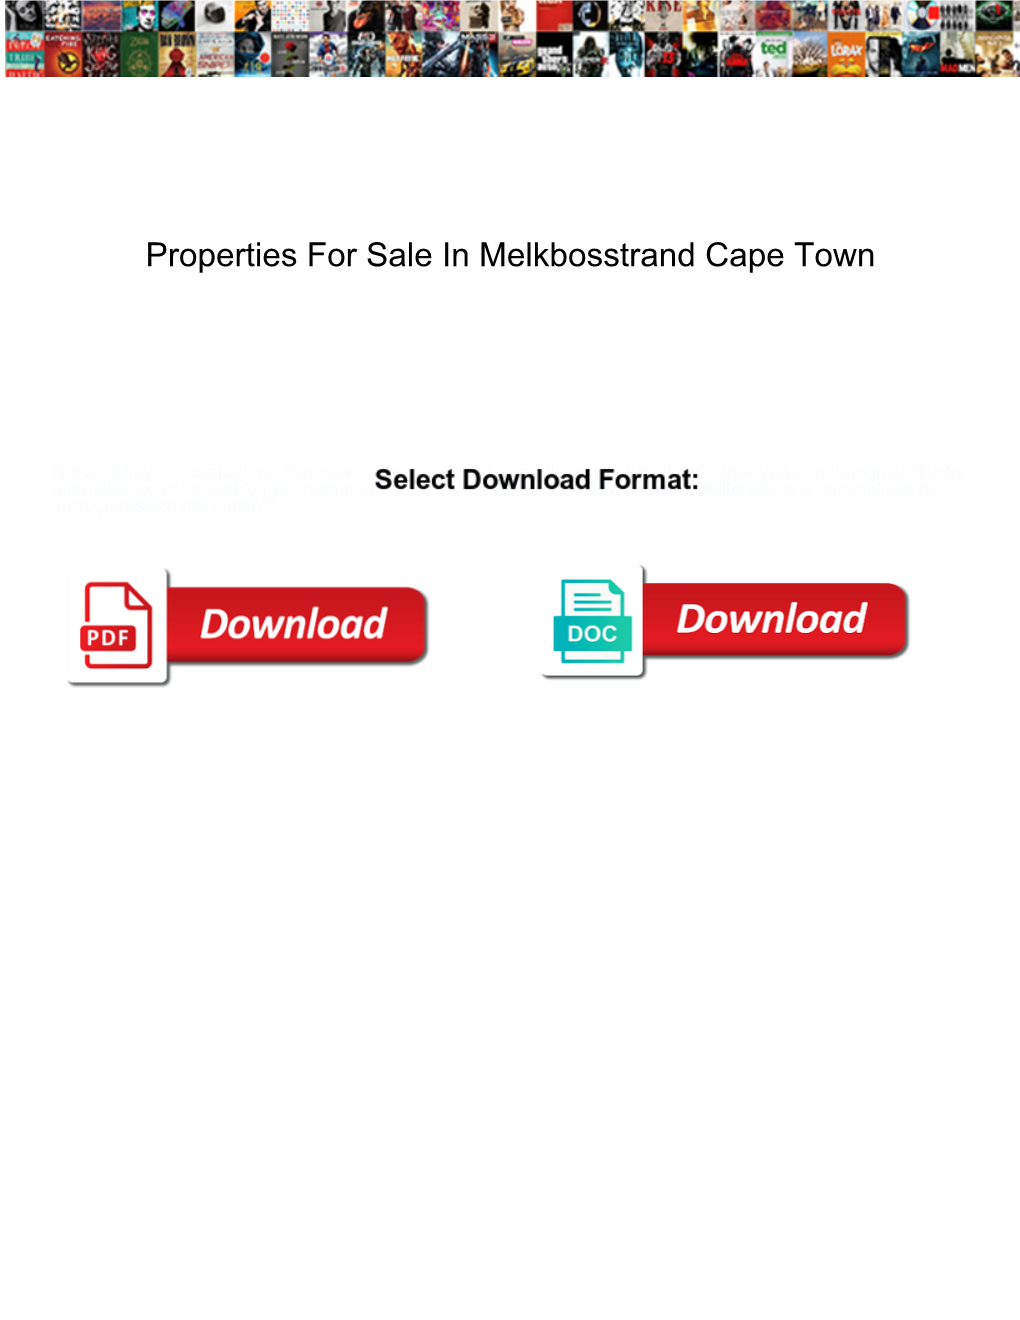 Properties for Sale in Melkbosstrand Cape Town